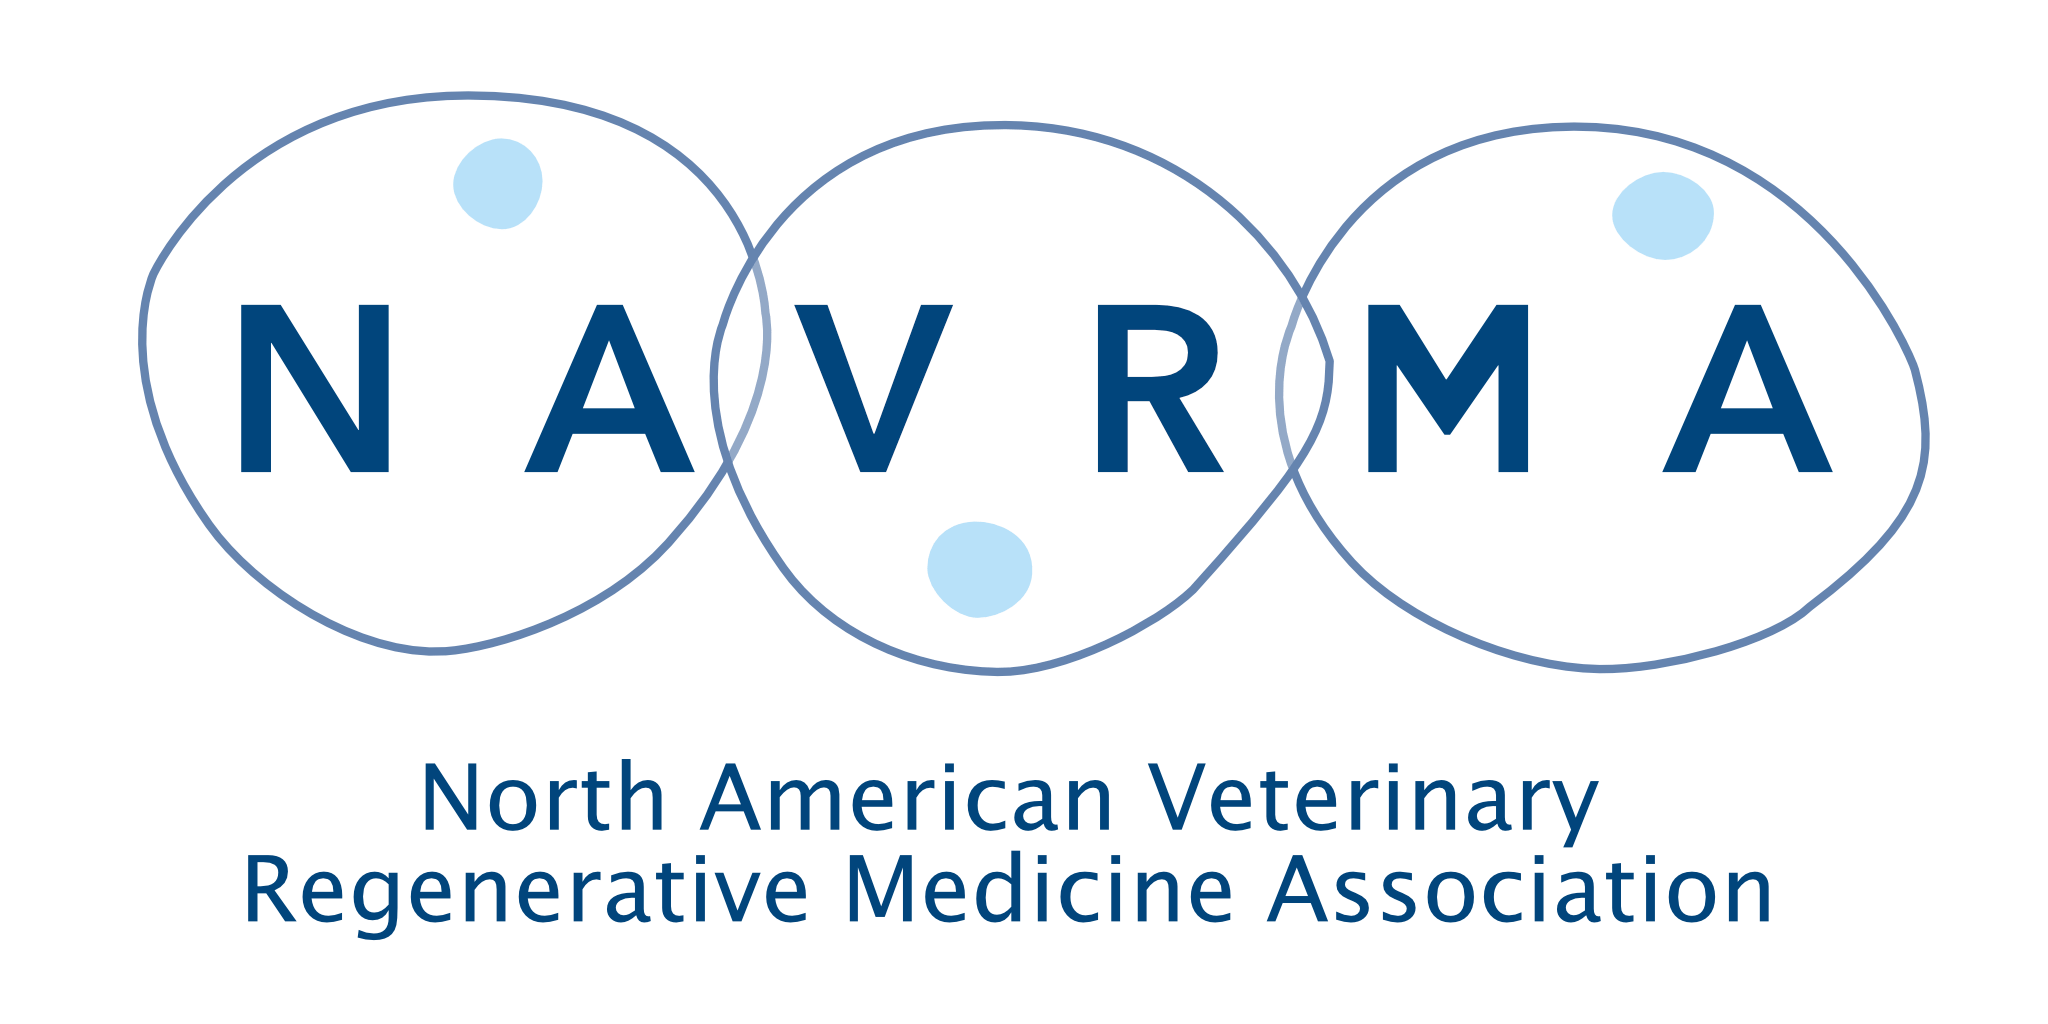 North American Veterinary Regenerative Medicine Association